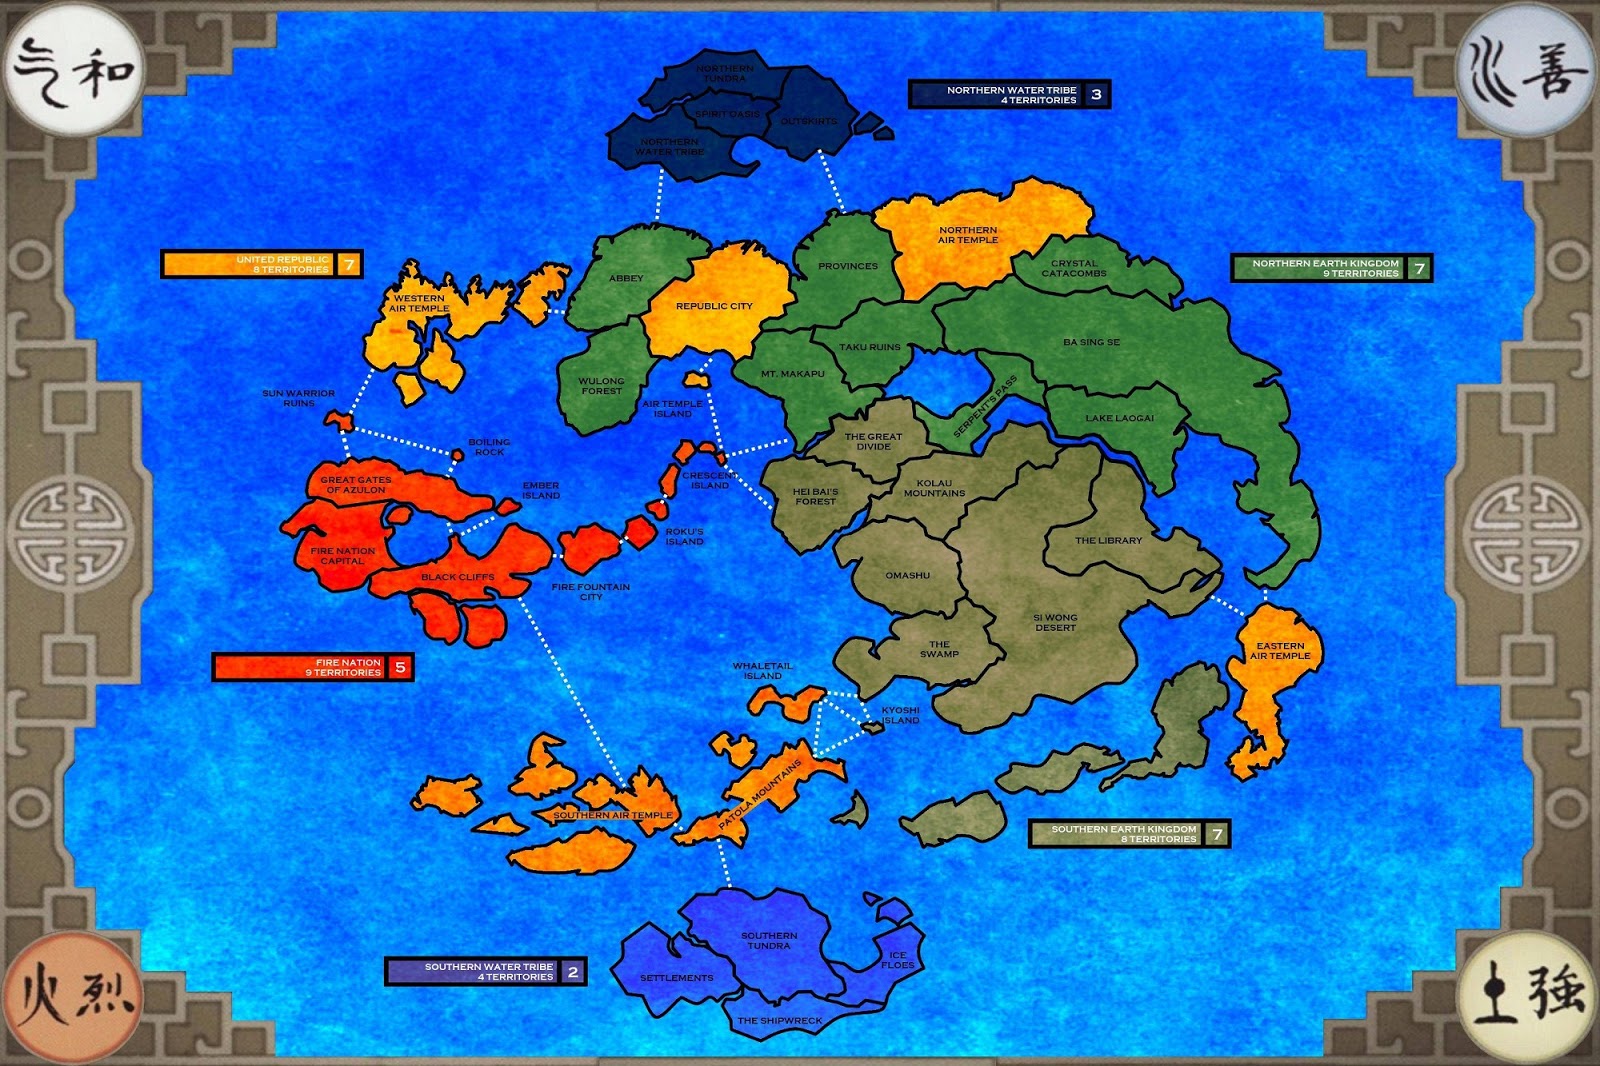 Avatar the last airbender world map - plmmost